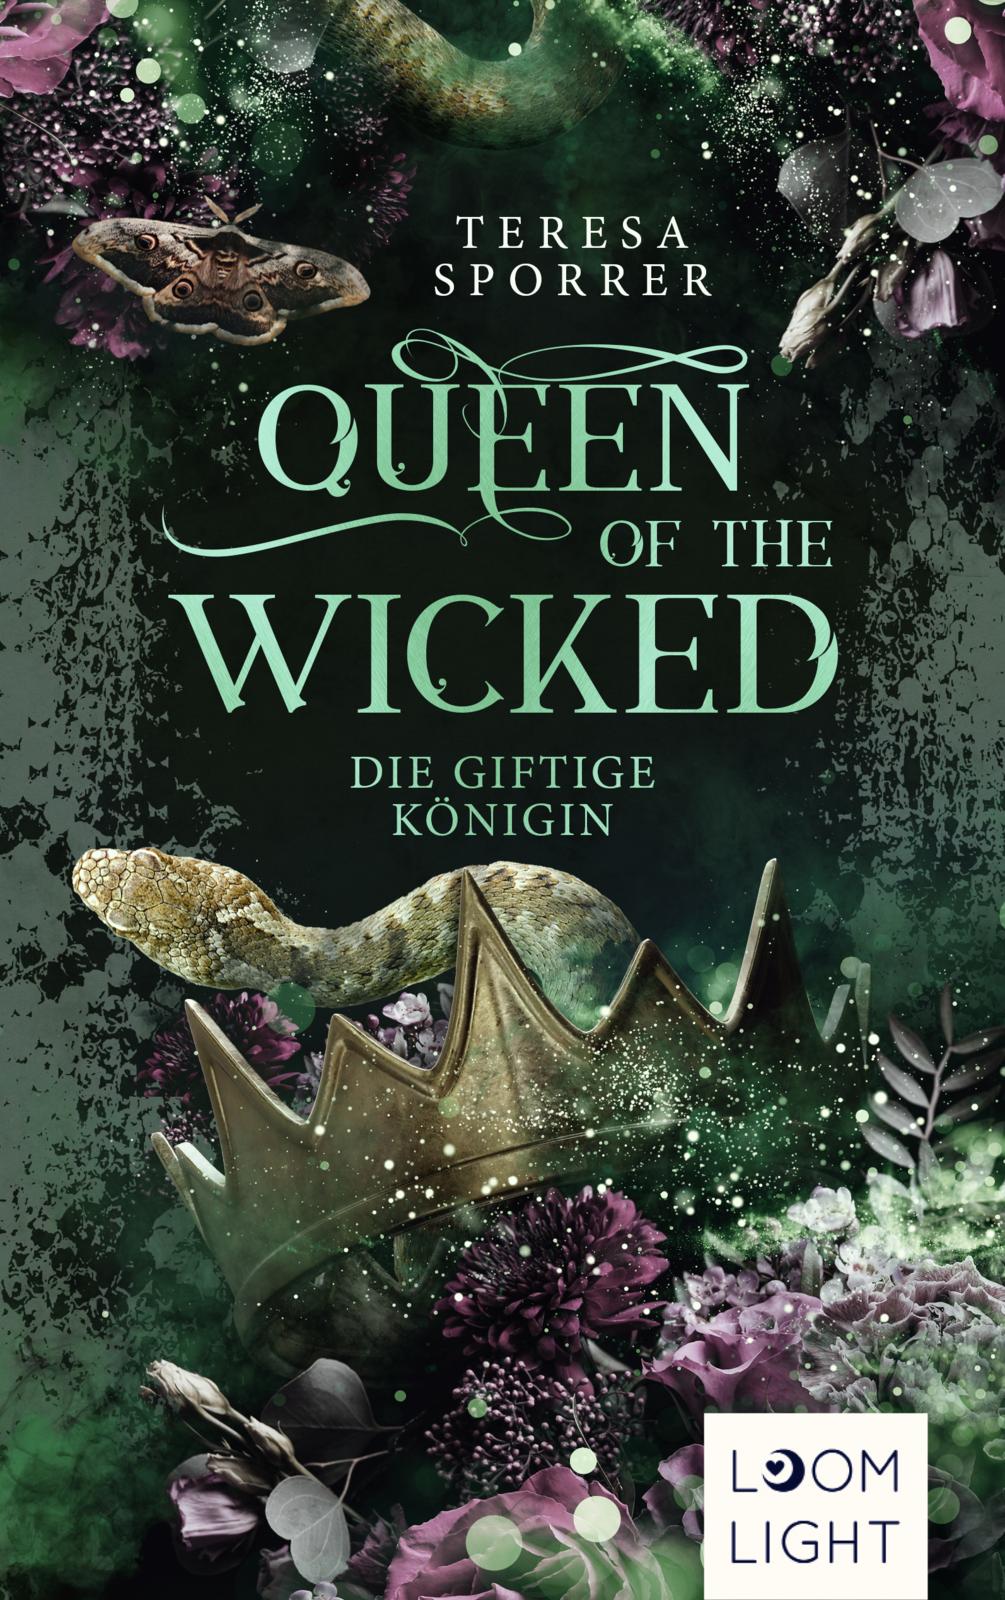 Queen of the Wicked (1) Die giftige Königin